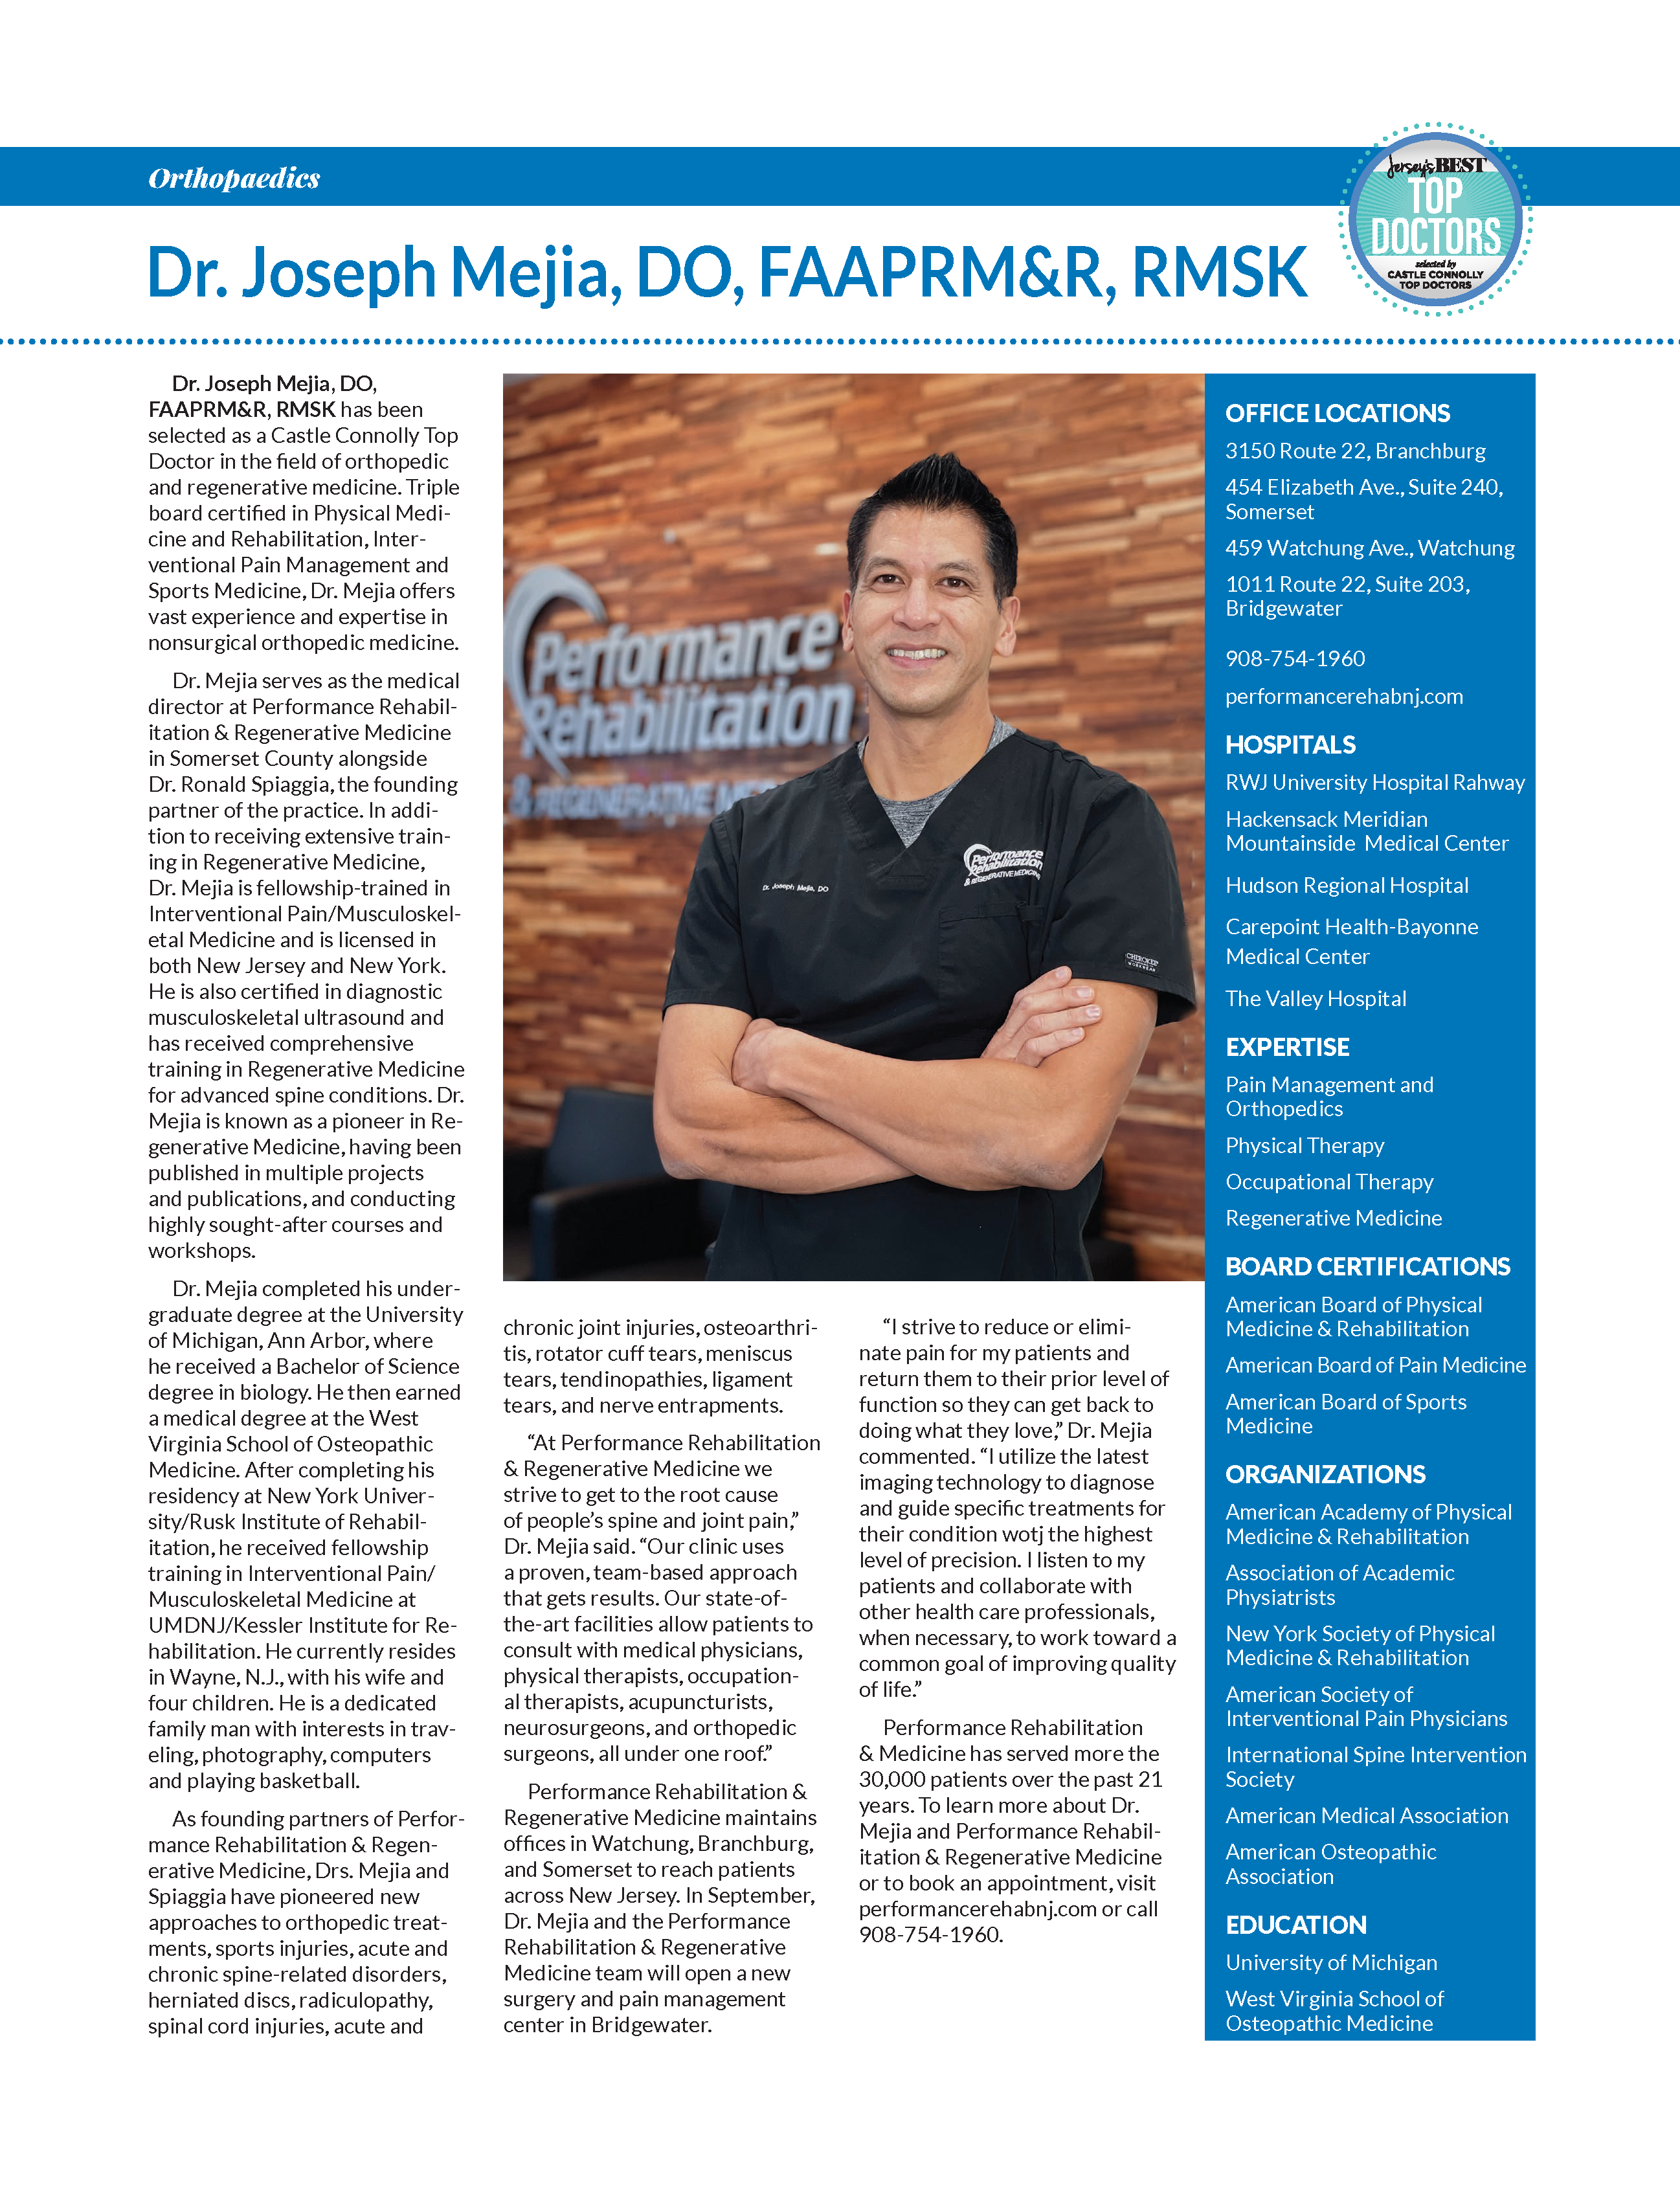 NJ Top Doctor Orthopedics and Regenerative Medicine, Dr. Joseph